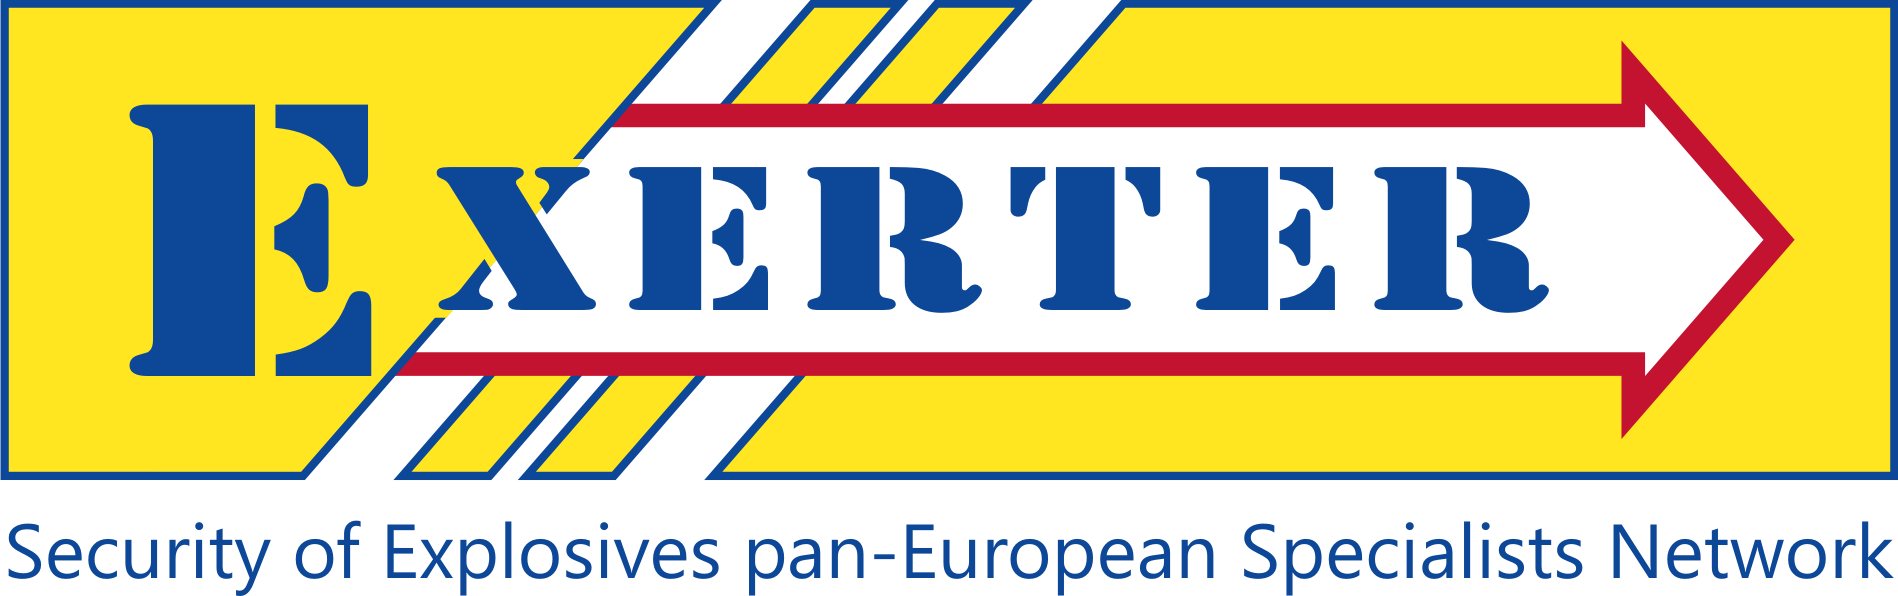 Security of Explosives pan-EuropeanSpecialists Network (EXERTER)